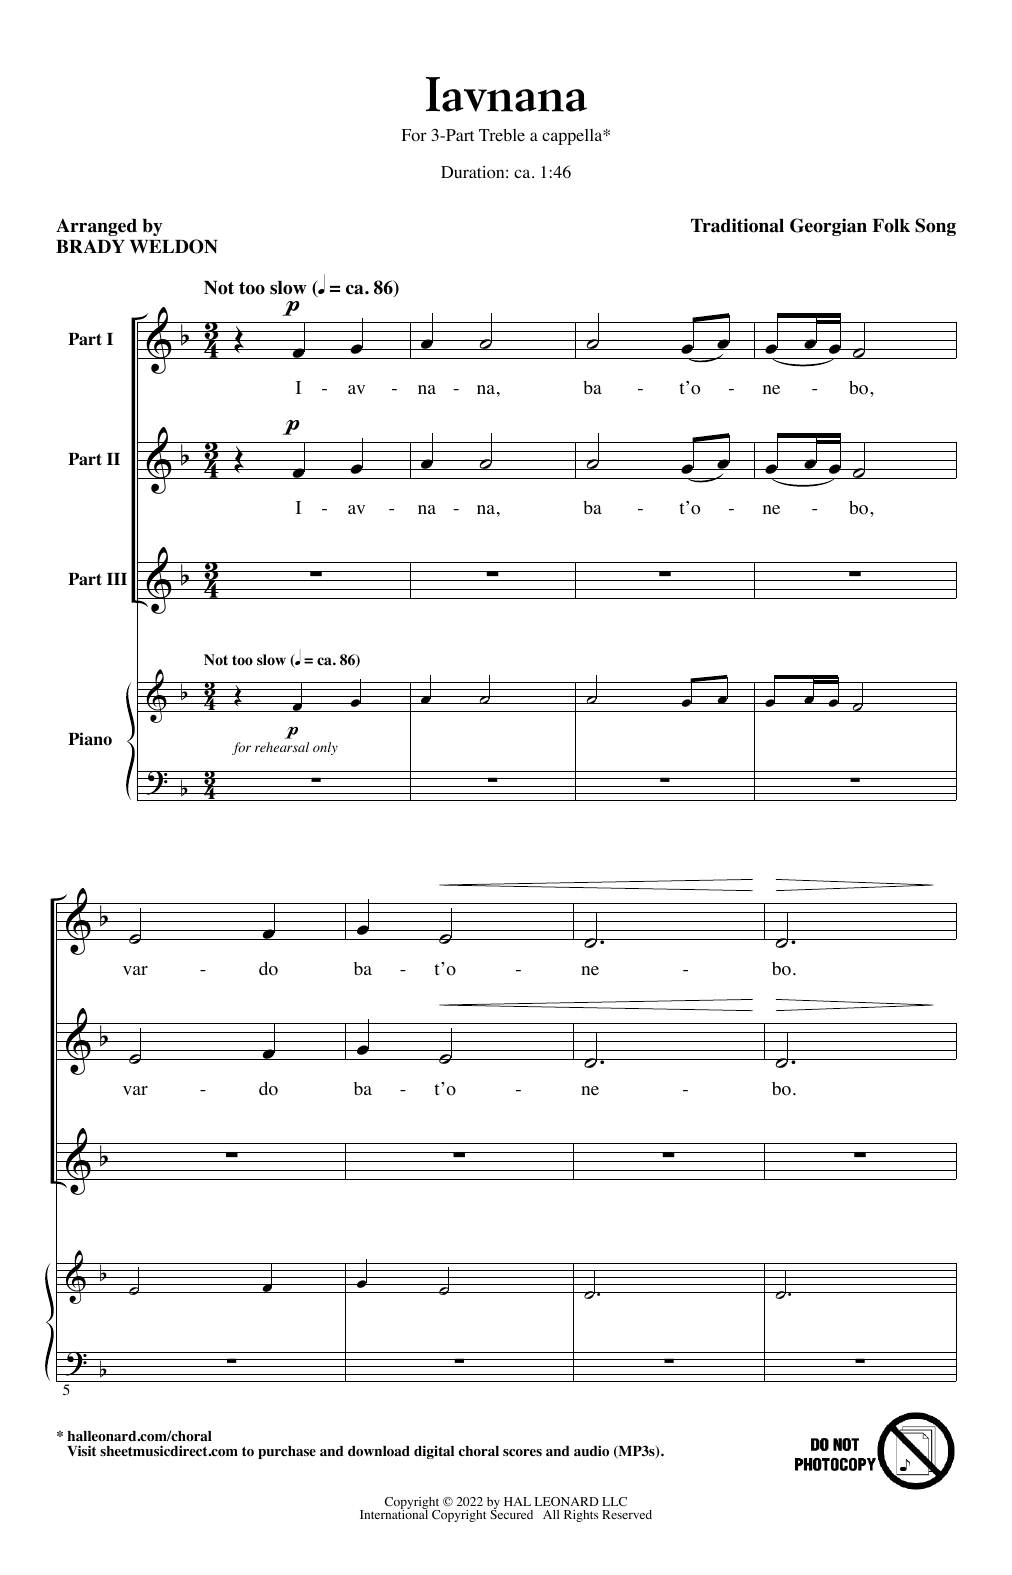 Traditional Georgian Folk Song Iavnana (arr. Brady Weldon) sheet music notes and chords arranged for 3-Part Treble Choir